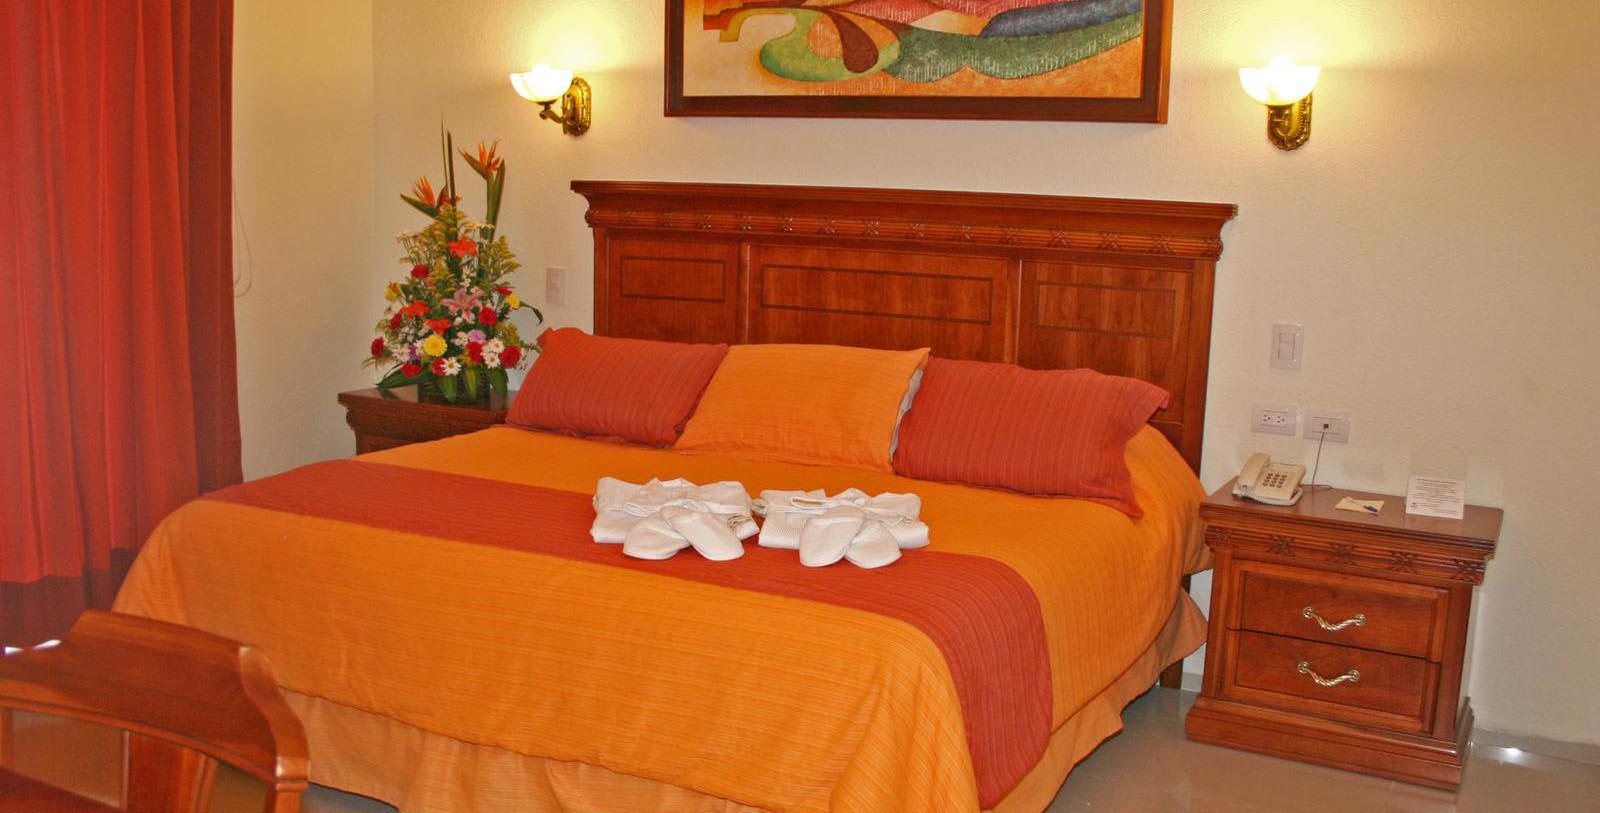 Image of Guestroom Interior, Gran Real Yucatan, Merida, Mexico, 1800s, Member of Historic Hotels Worldwide, Hot Deals